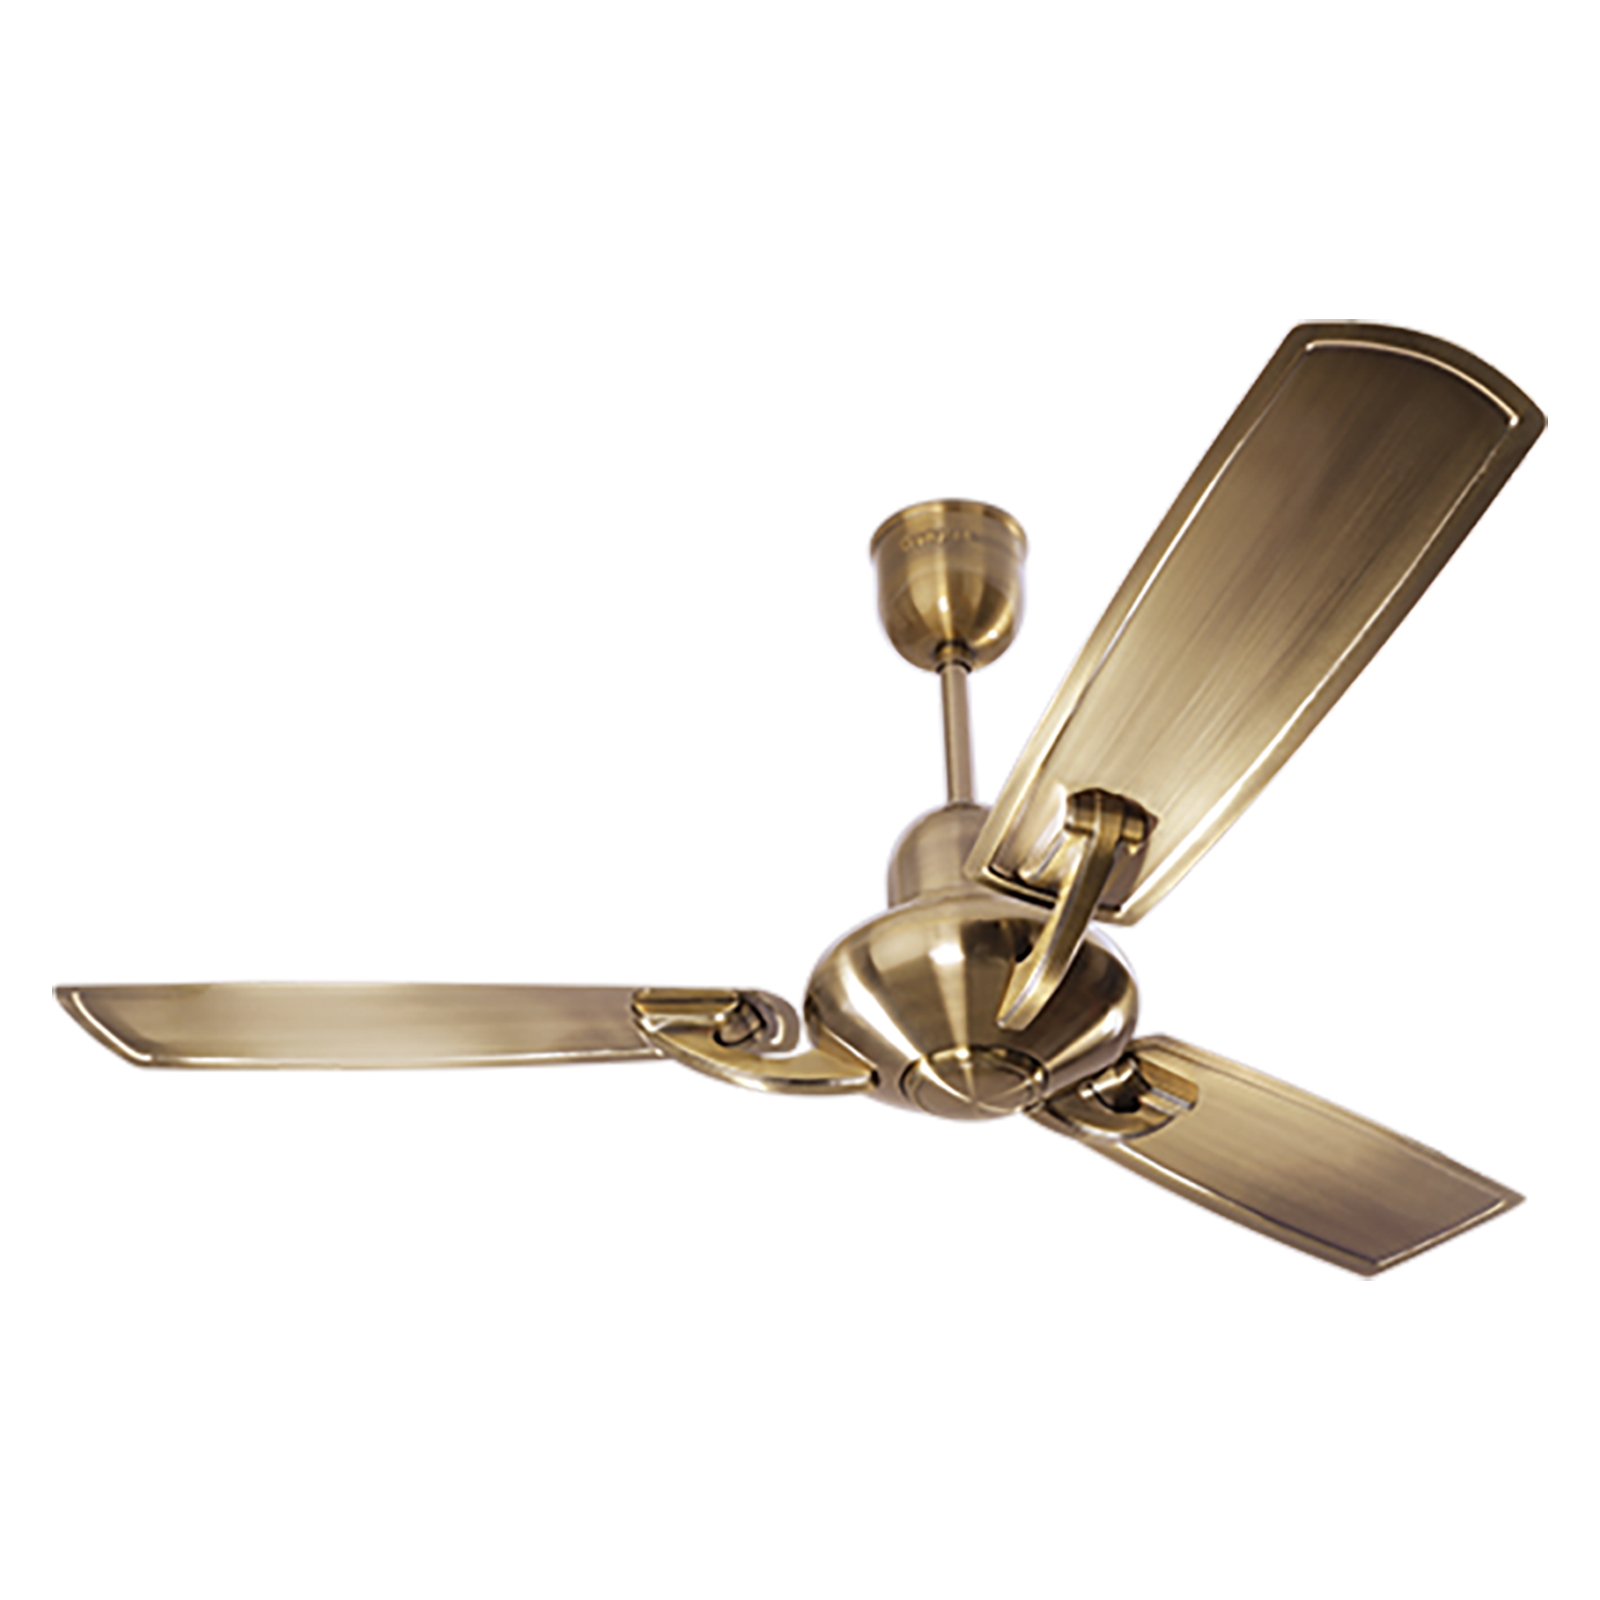 Crompton Triton 120 cm 3 Blade Ceiling Fan (TRIT48IVY, Ivory)_1